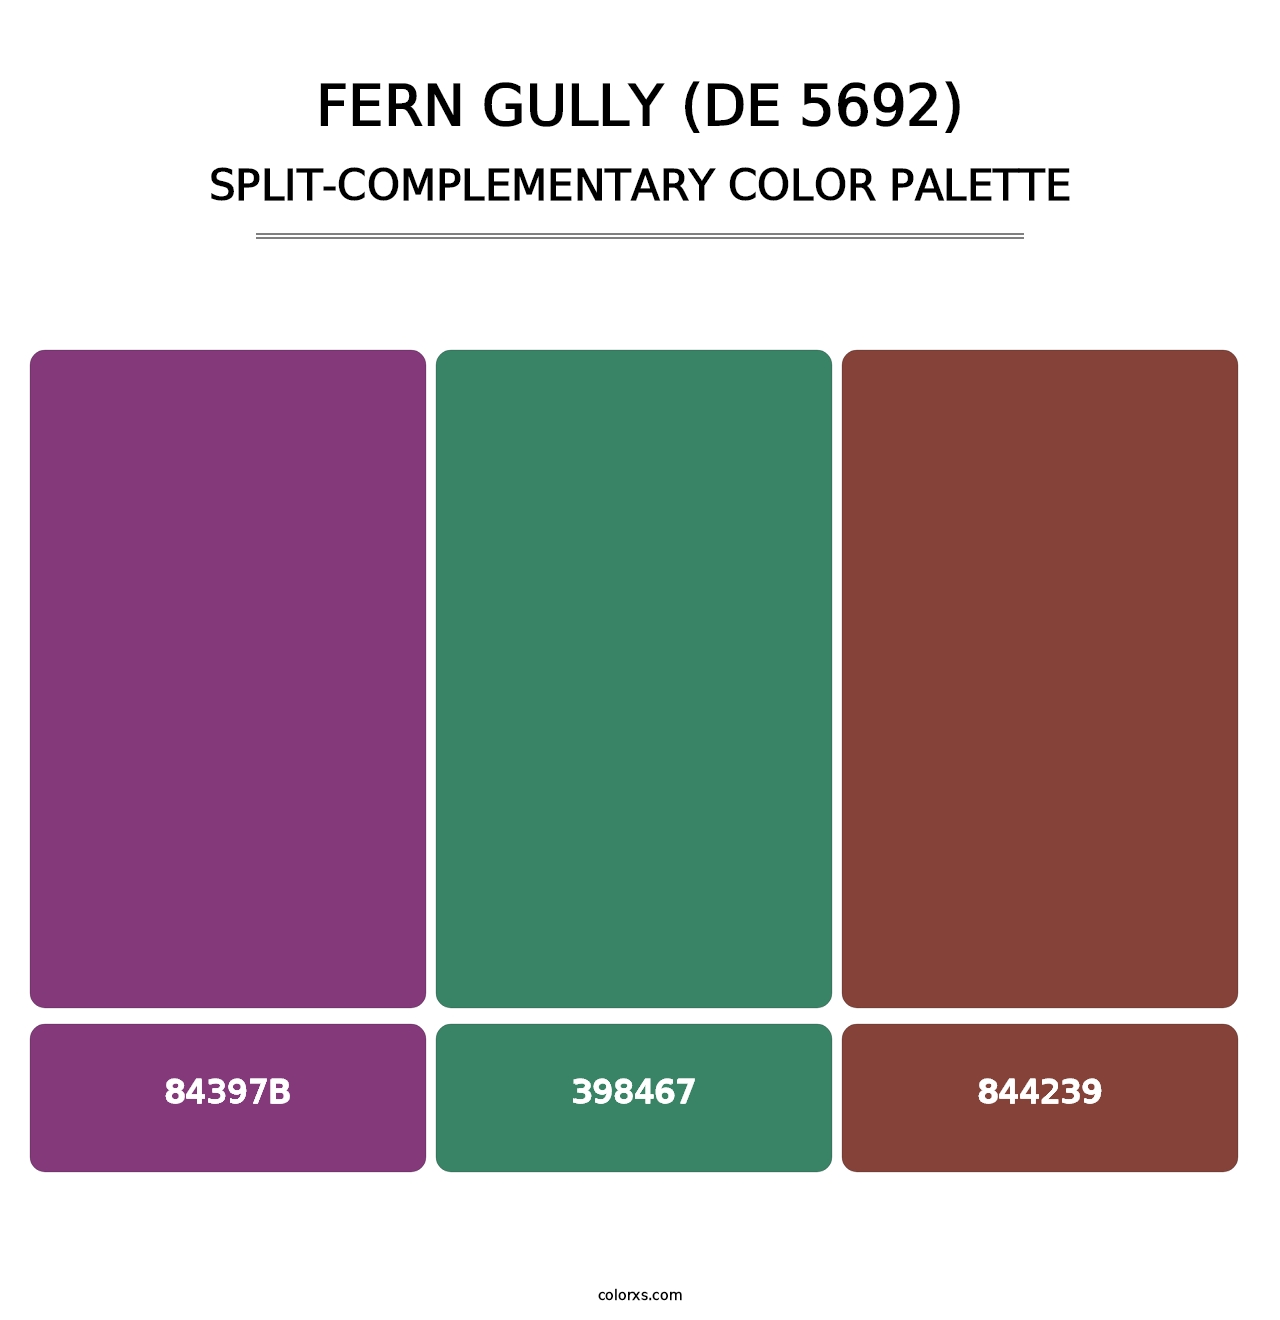 Fern Gully (DE 5692) - Split-Complementary Color Palette